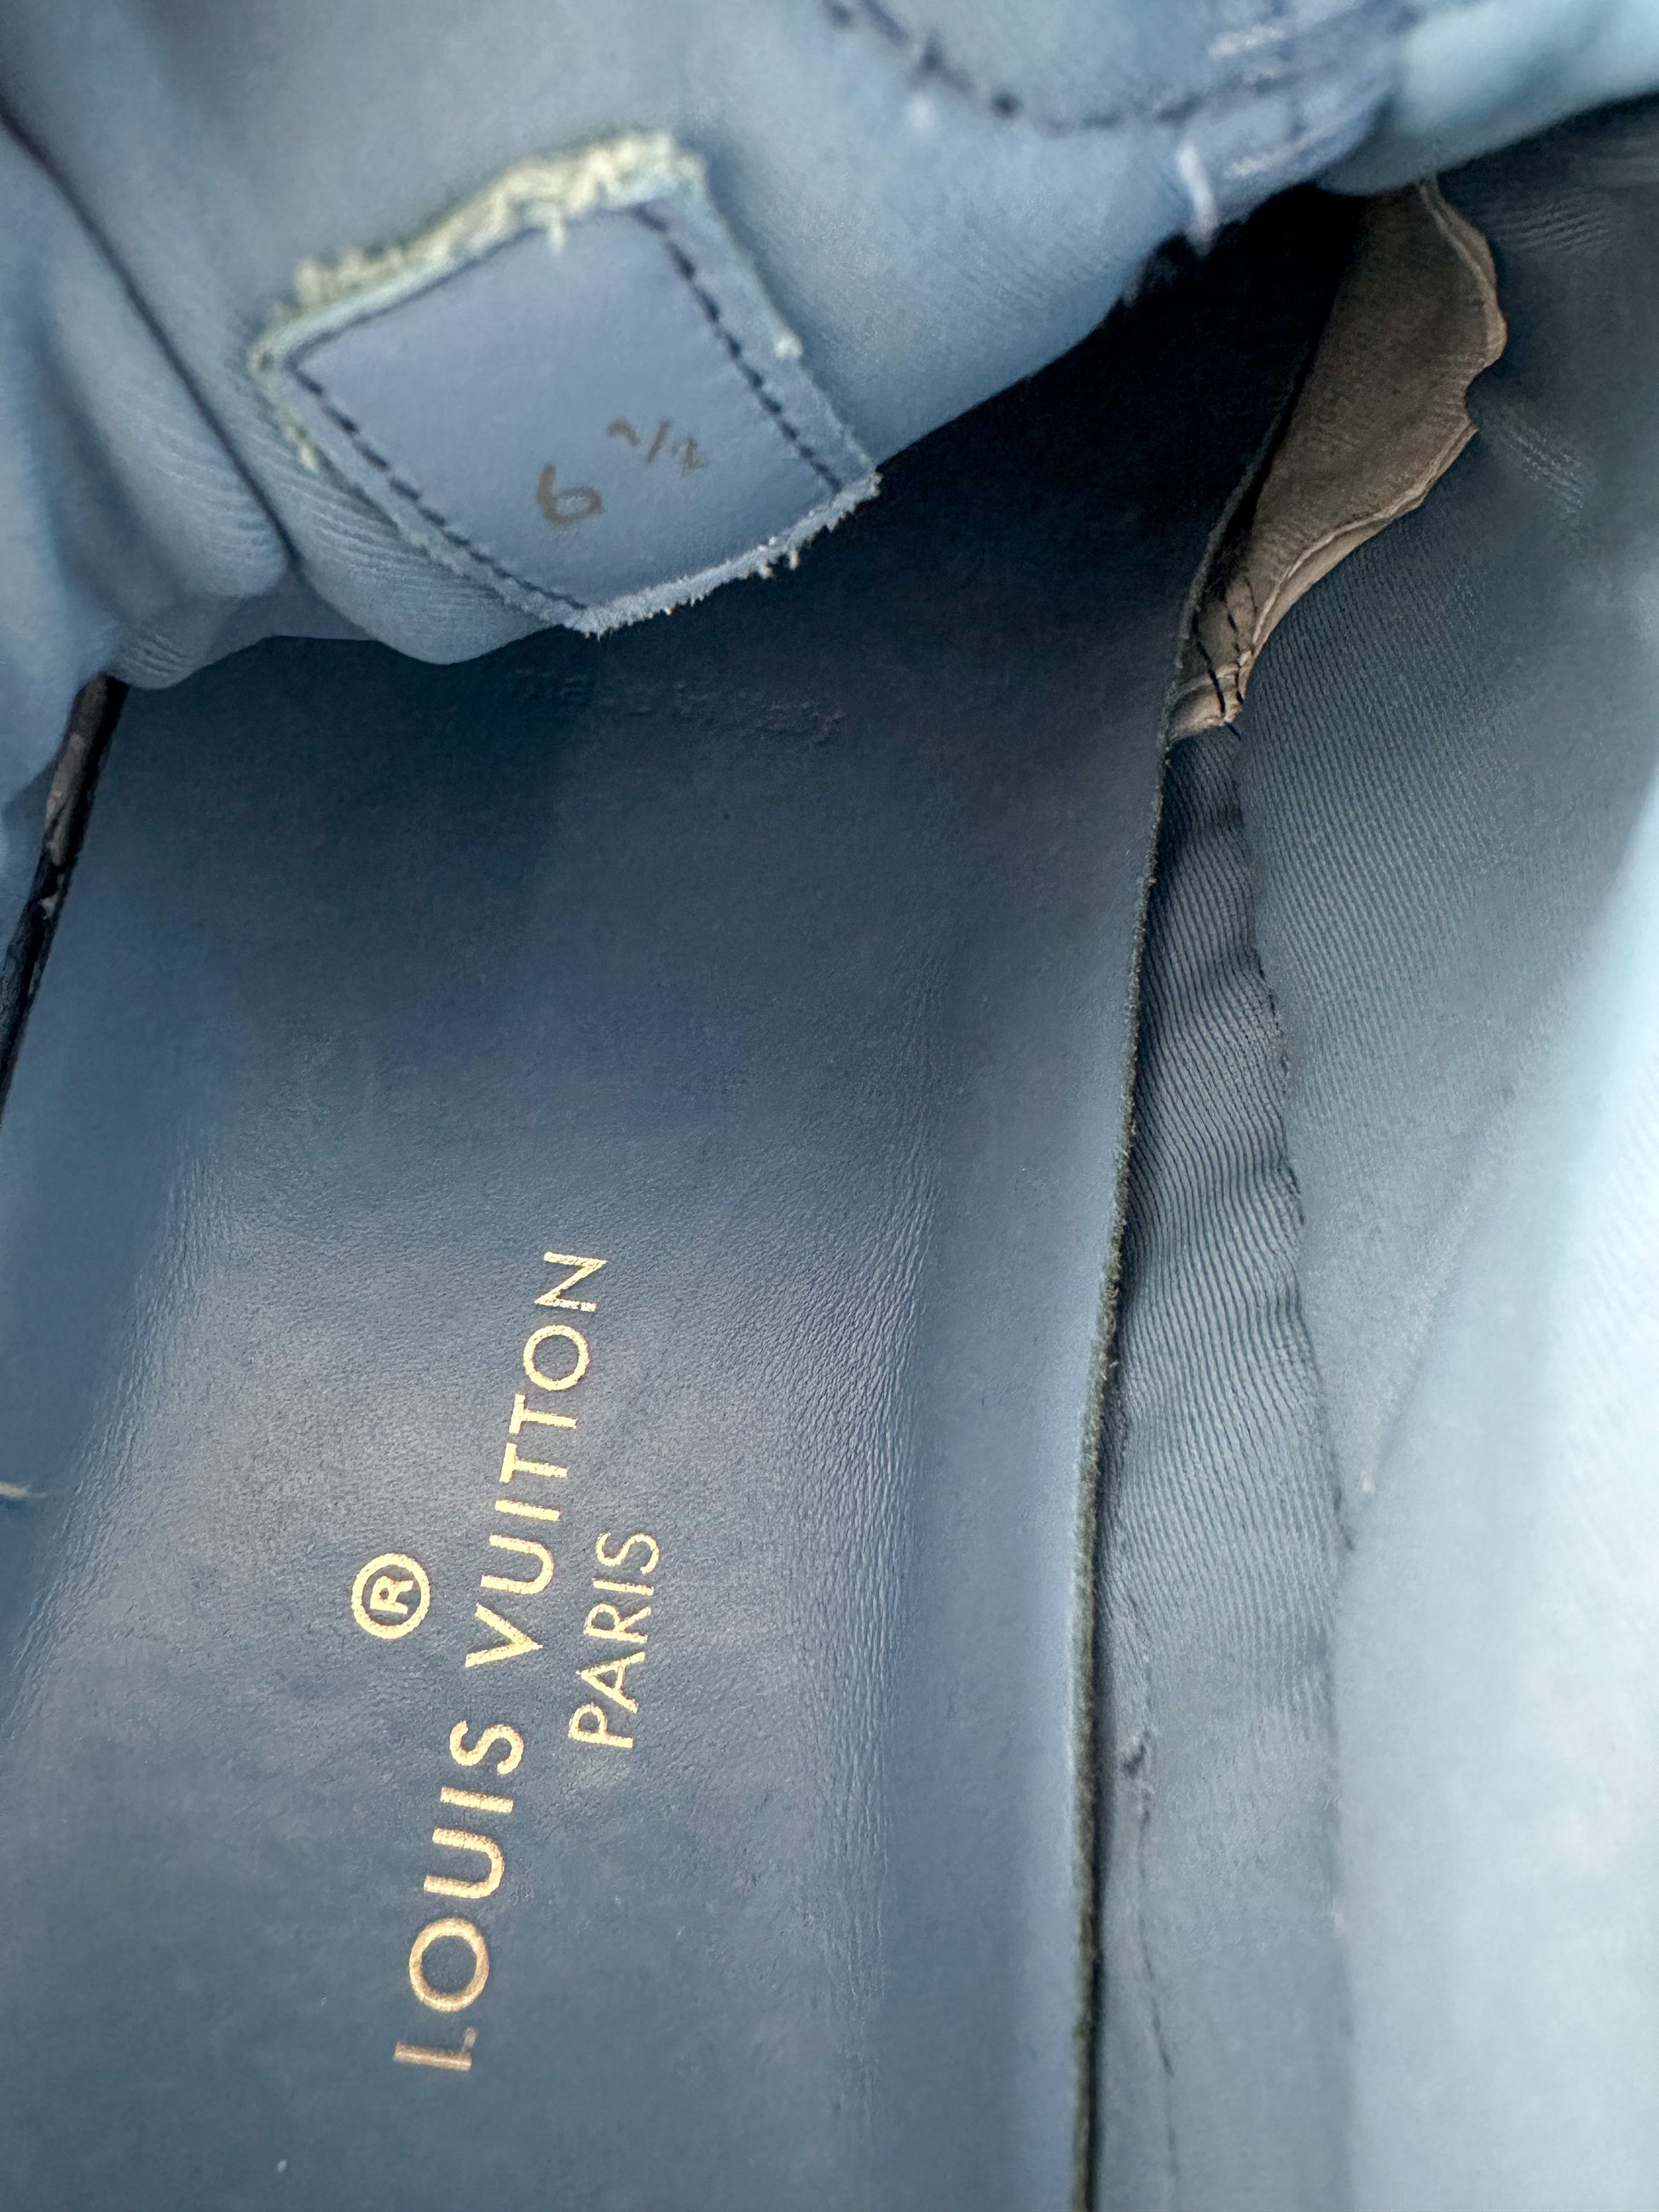 Louis Vuitton Blue Denim Monogram Crystal Skate Trainers